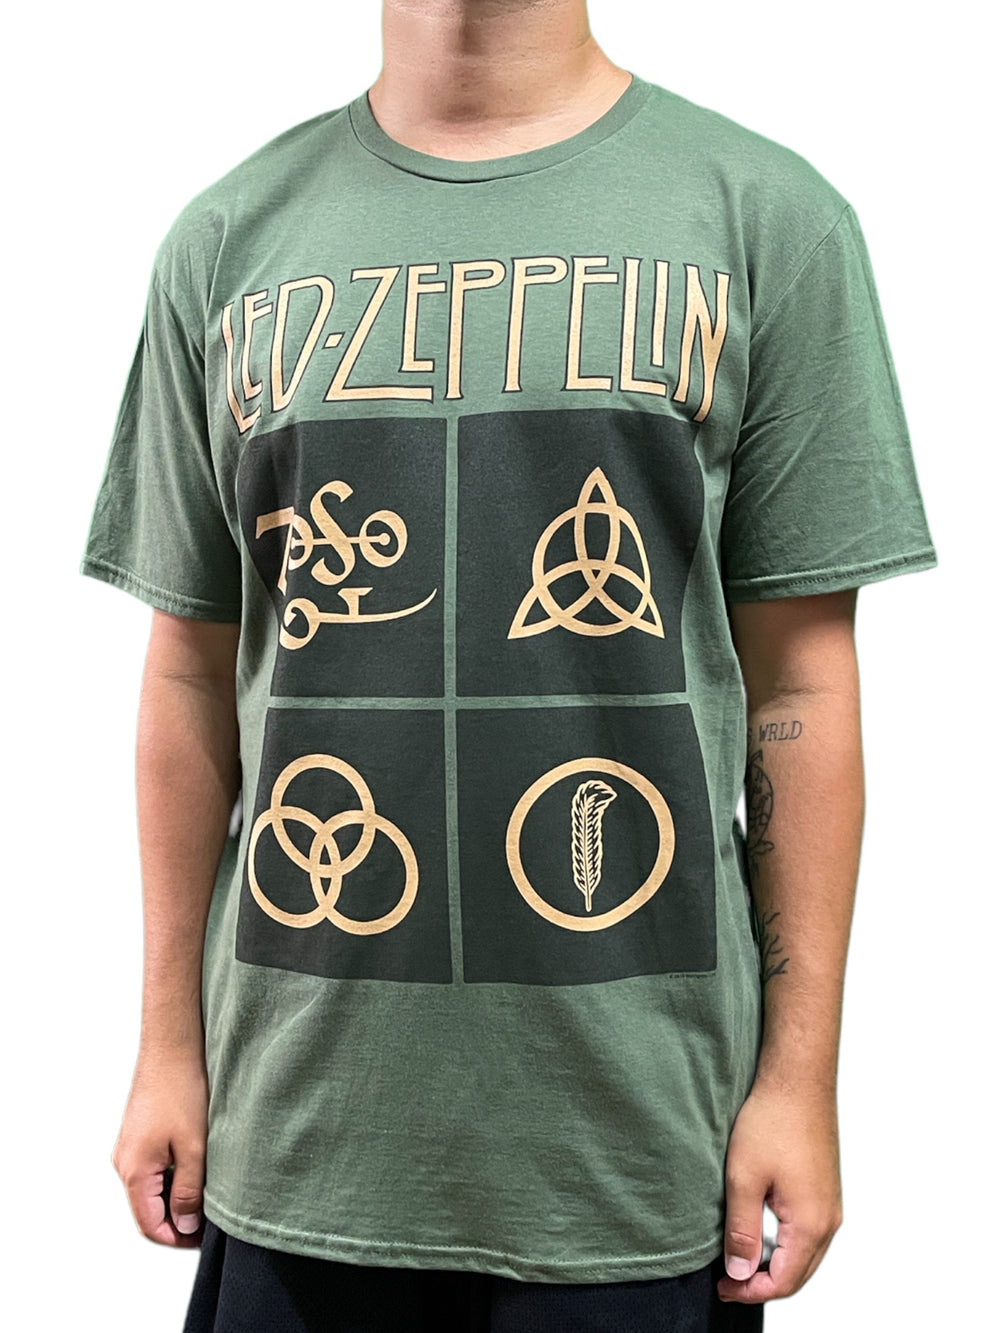 Led Zeppelin Gold Symbols Unisex Official Tee Shirt Various Sizes NEW